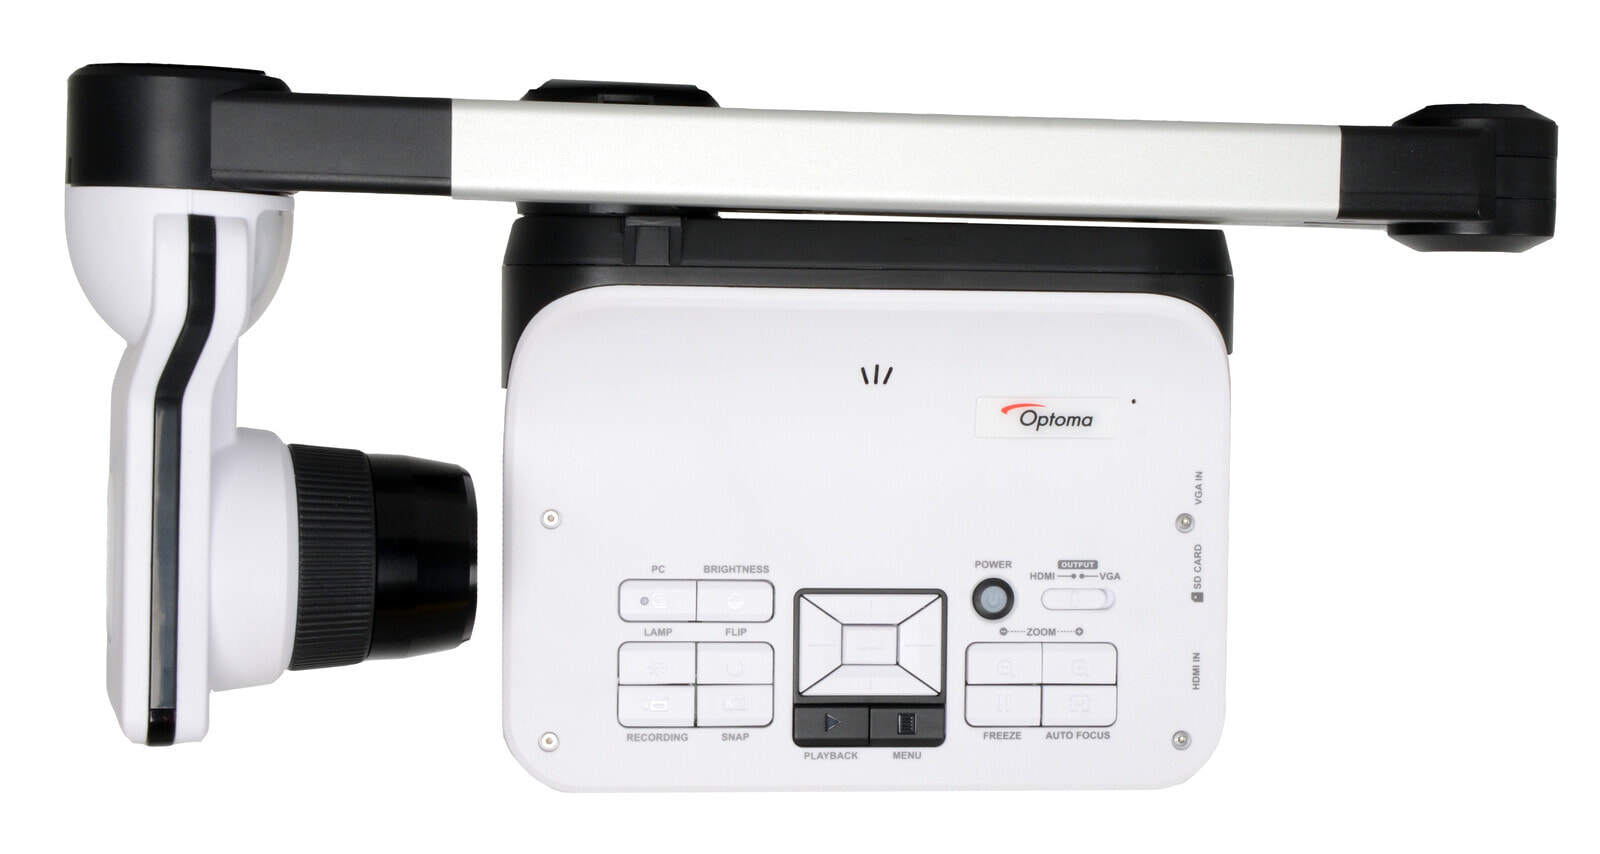 Optoma 8MP CAMERA 136 ZOOM документ-камера USB 2.0 Черный, Белый DC556